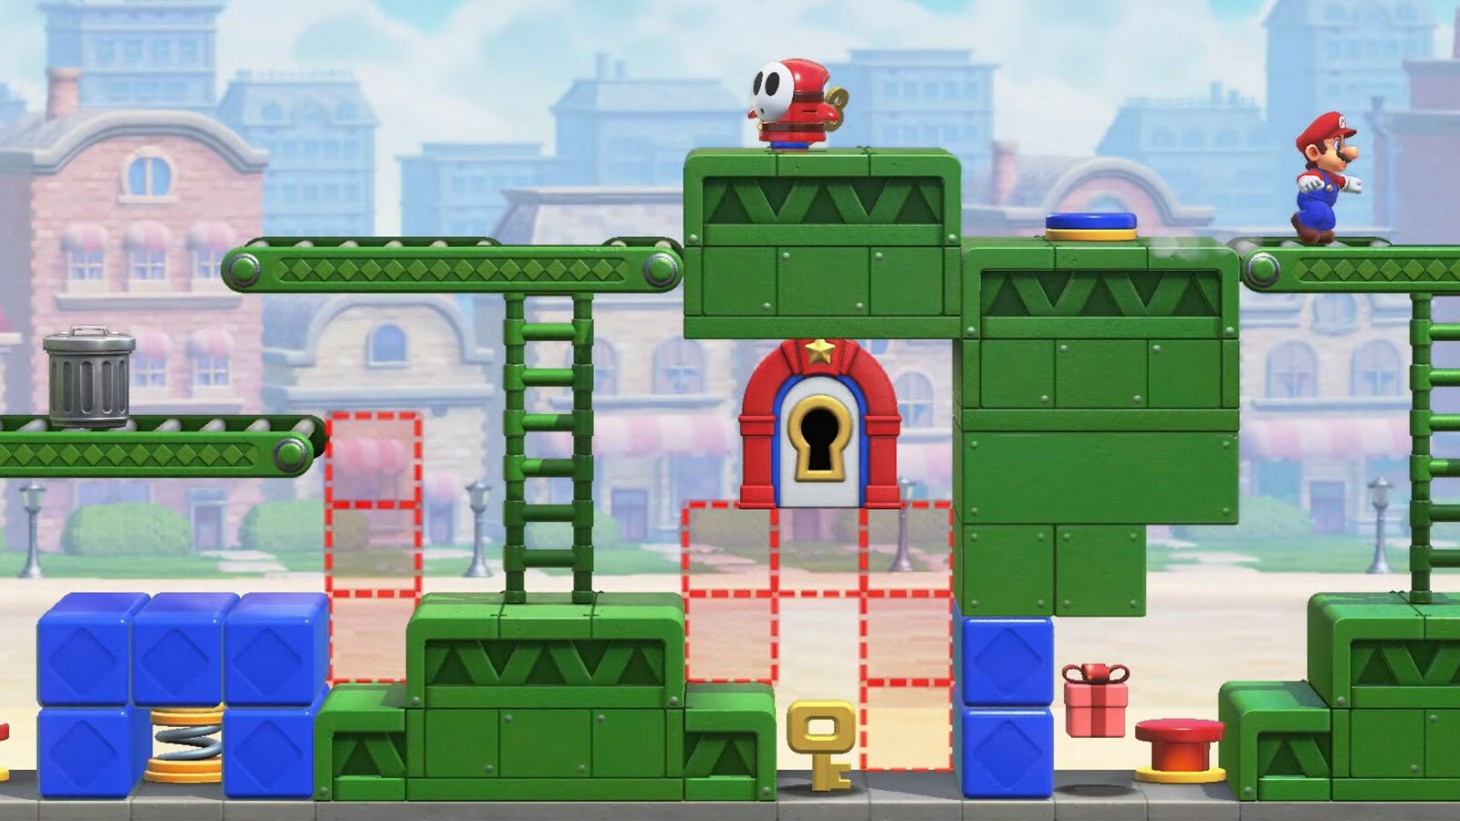 Mario Vs Donkey Kong' Release Date, Platforms & Game Length